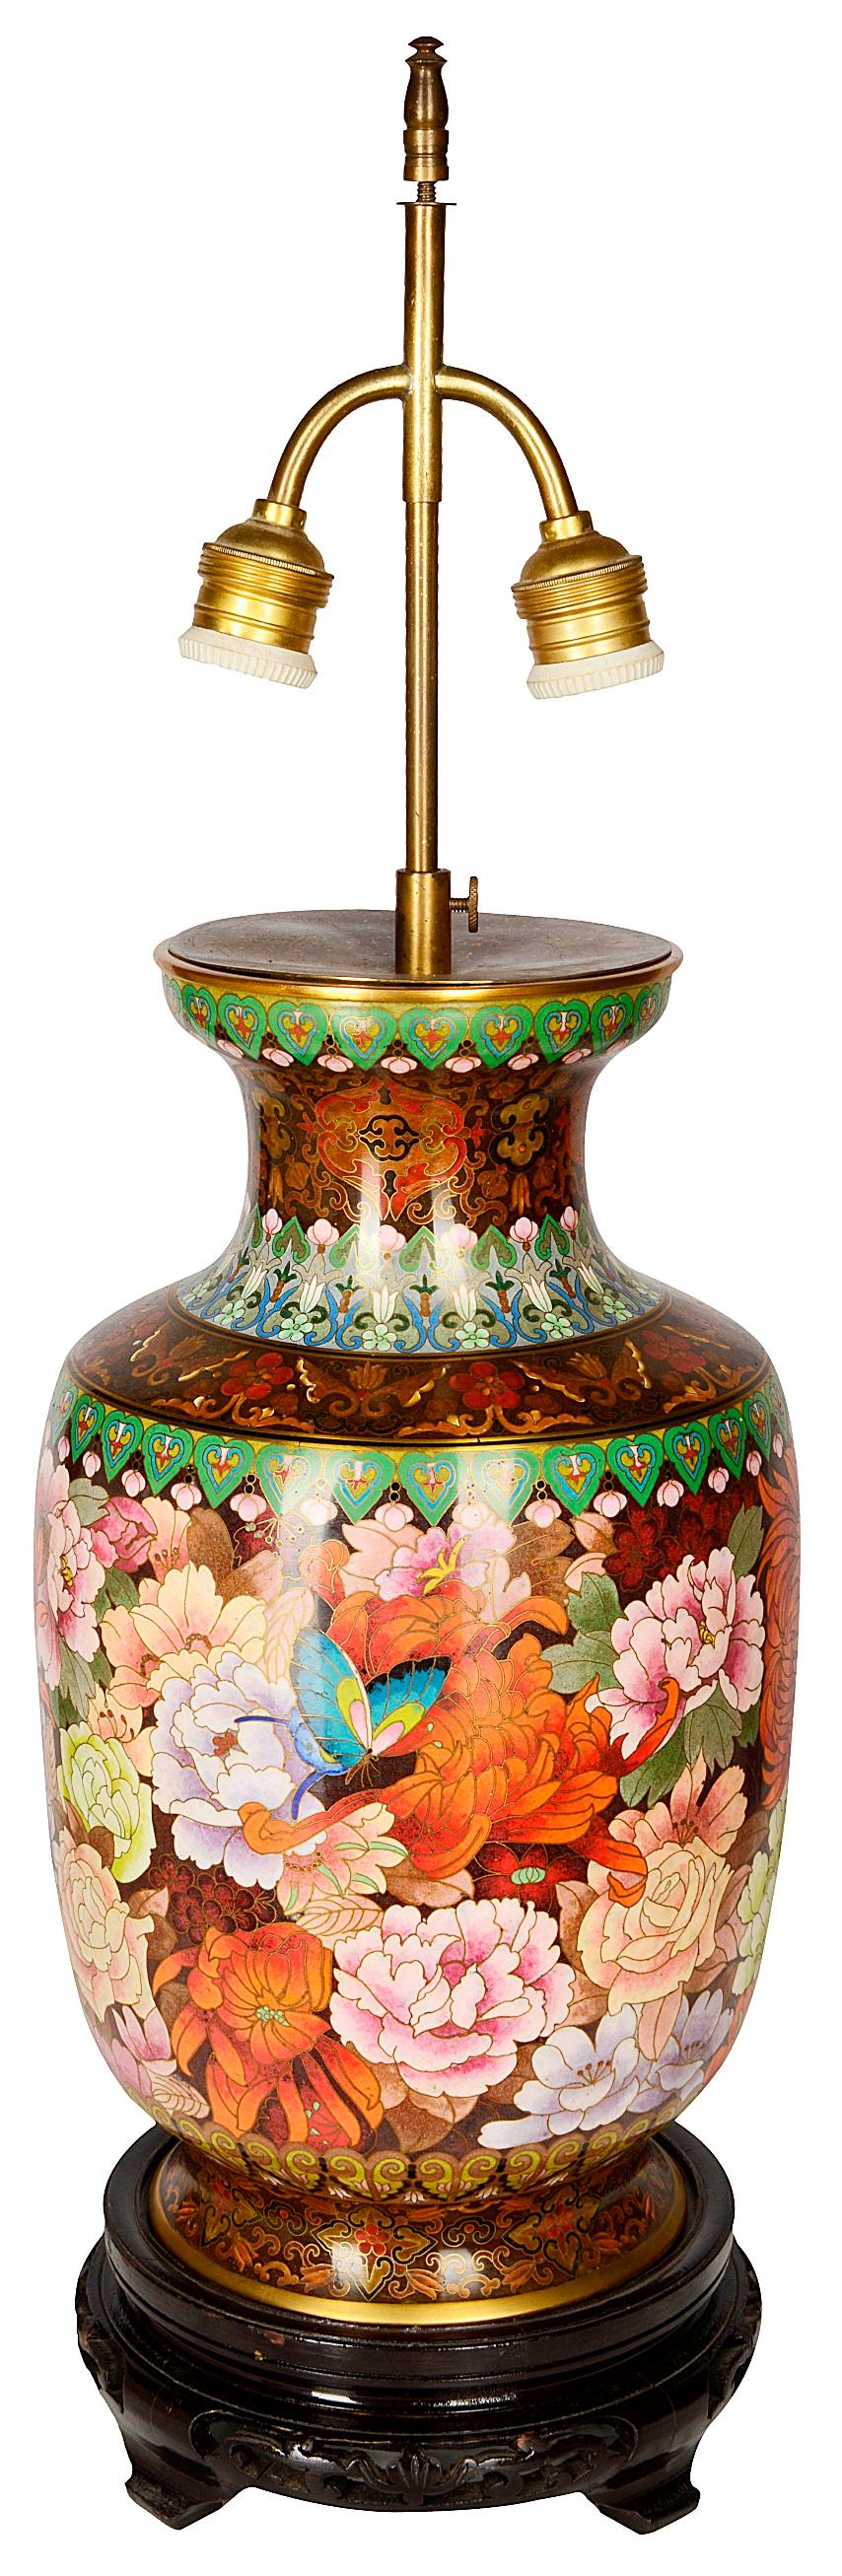 Japonisme Pair Early 20th Century Japanese Cloisonné Enamel Vases or Lamps